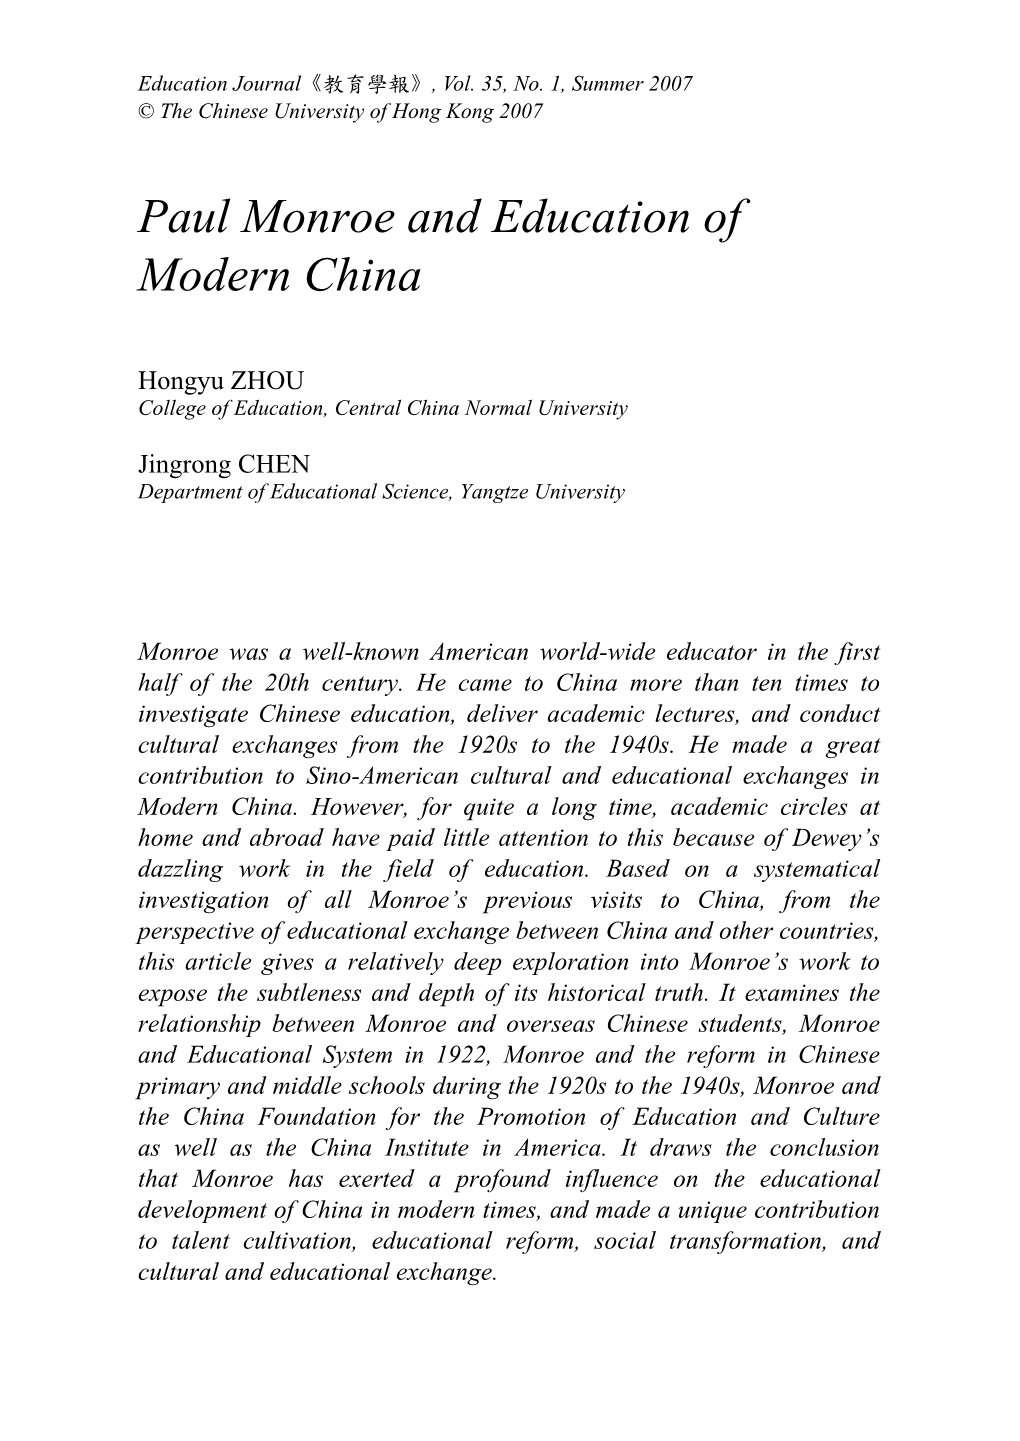 Paul Monroe and Education of Modern China